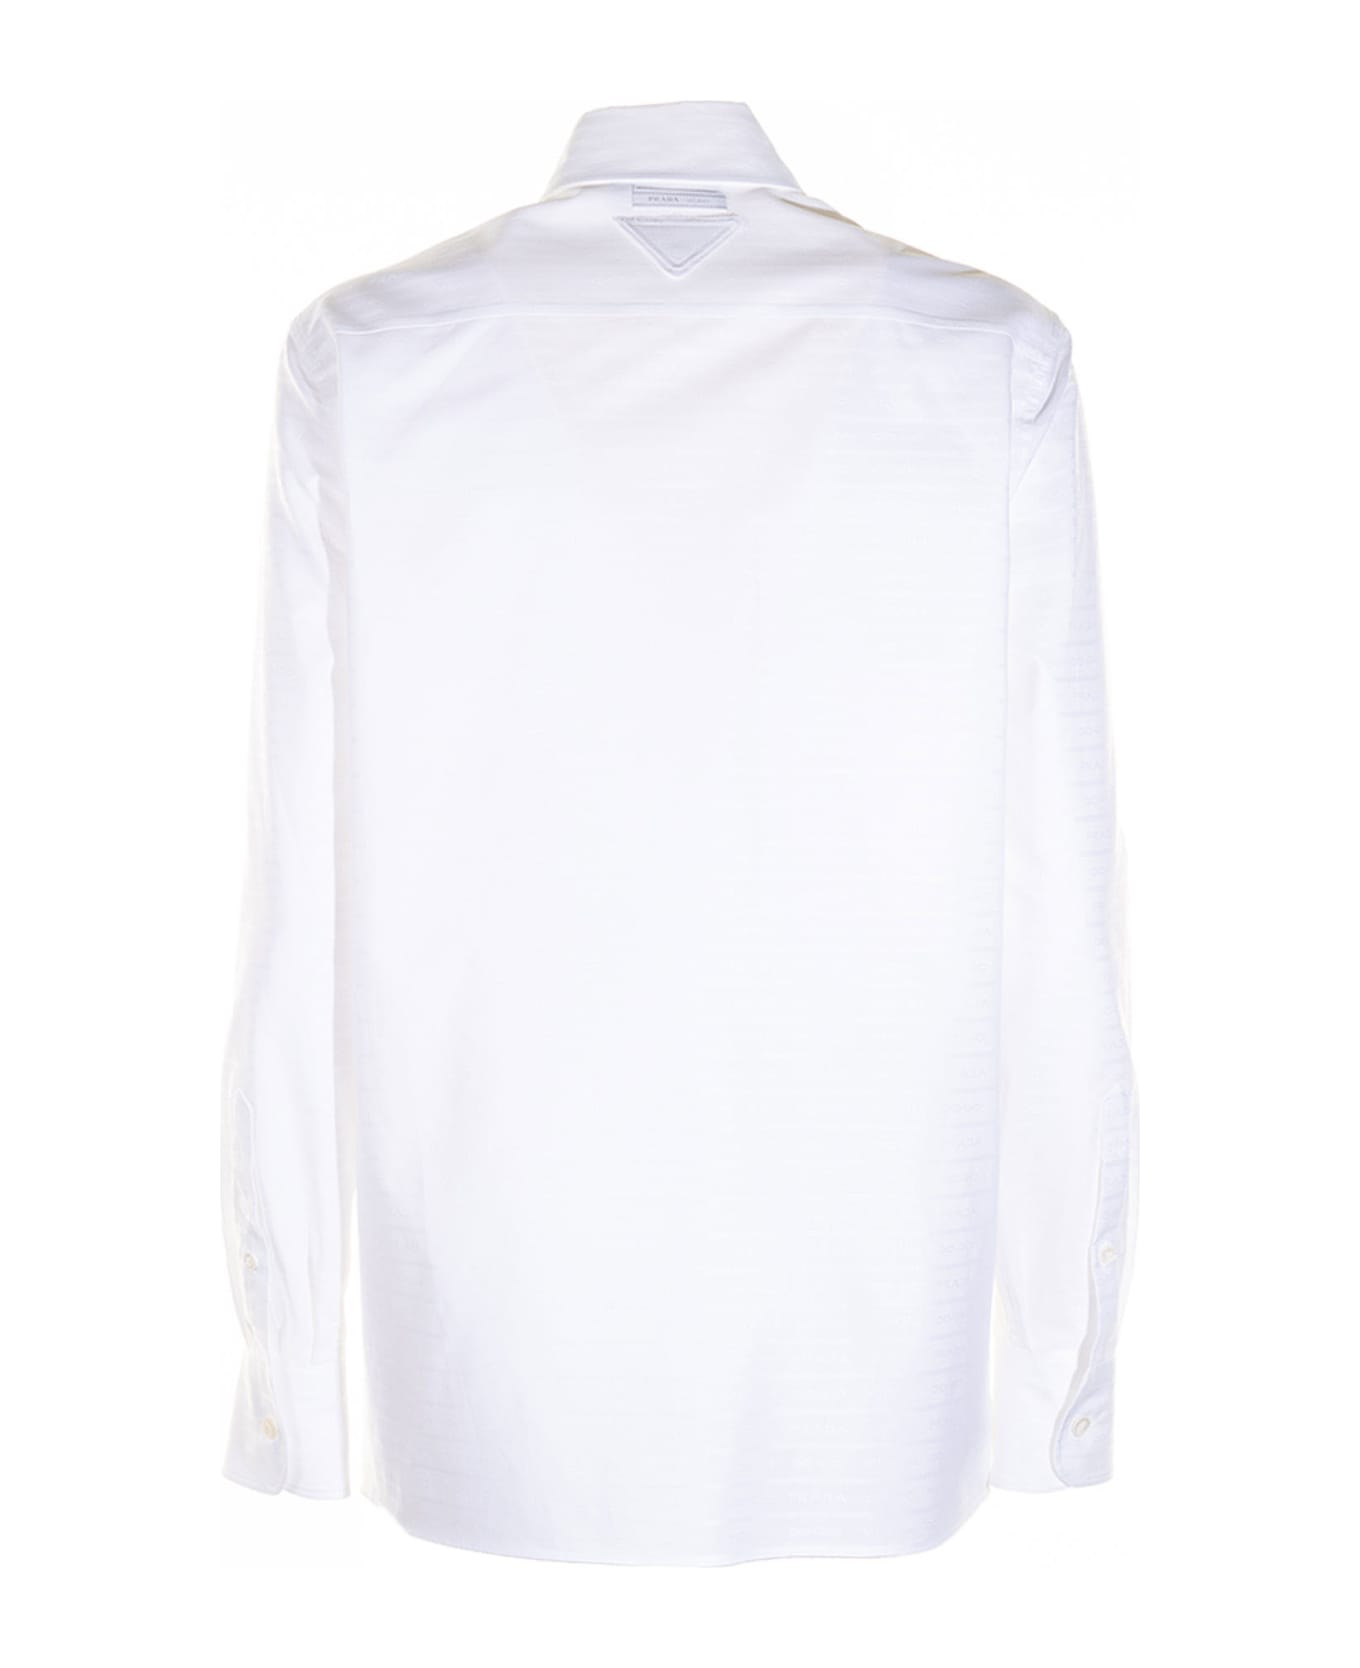 Prada Jacquard Poplin Shirt - BIANCO シャツ